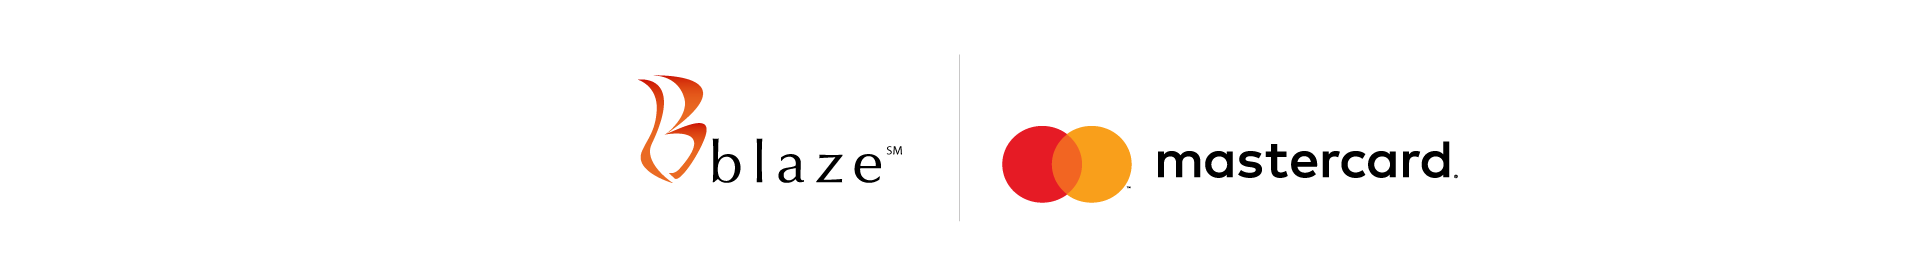 Blaze Credit Card Banner